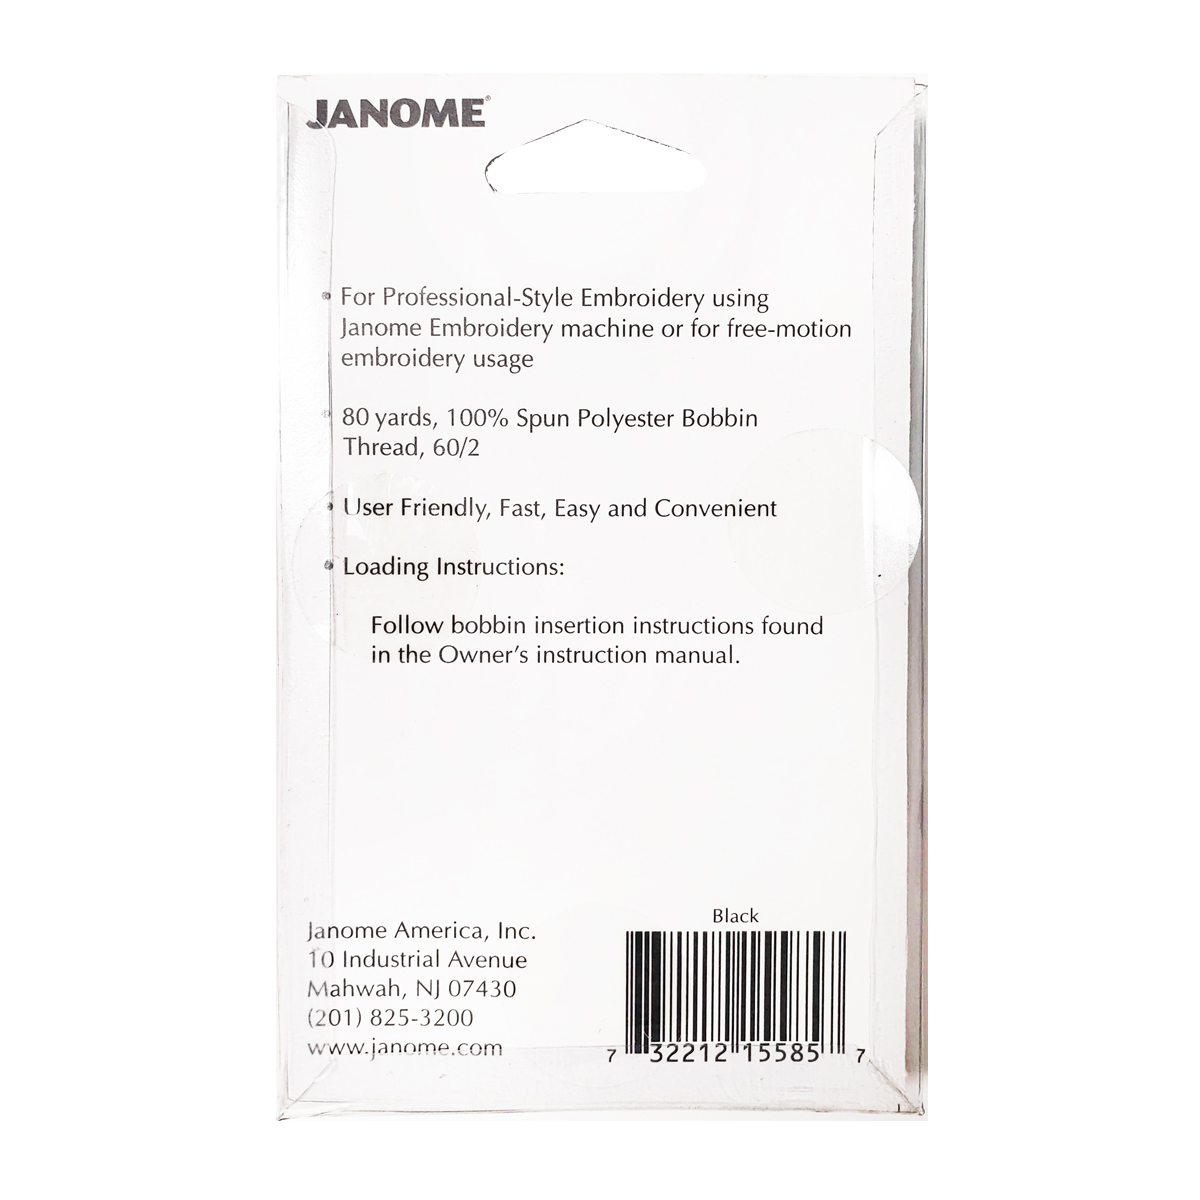 Janome 12 Pack Pre-Wound Plastic Bobbins White Embroidery Thread